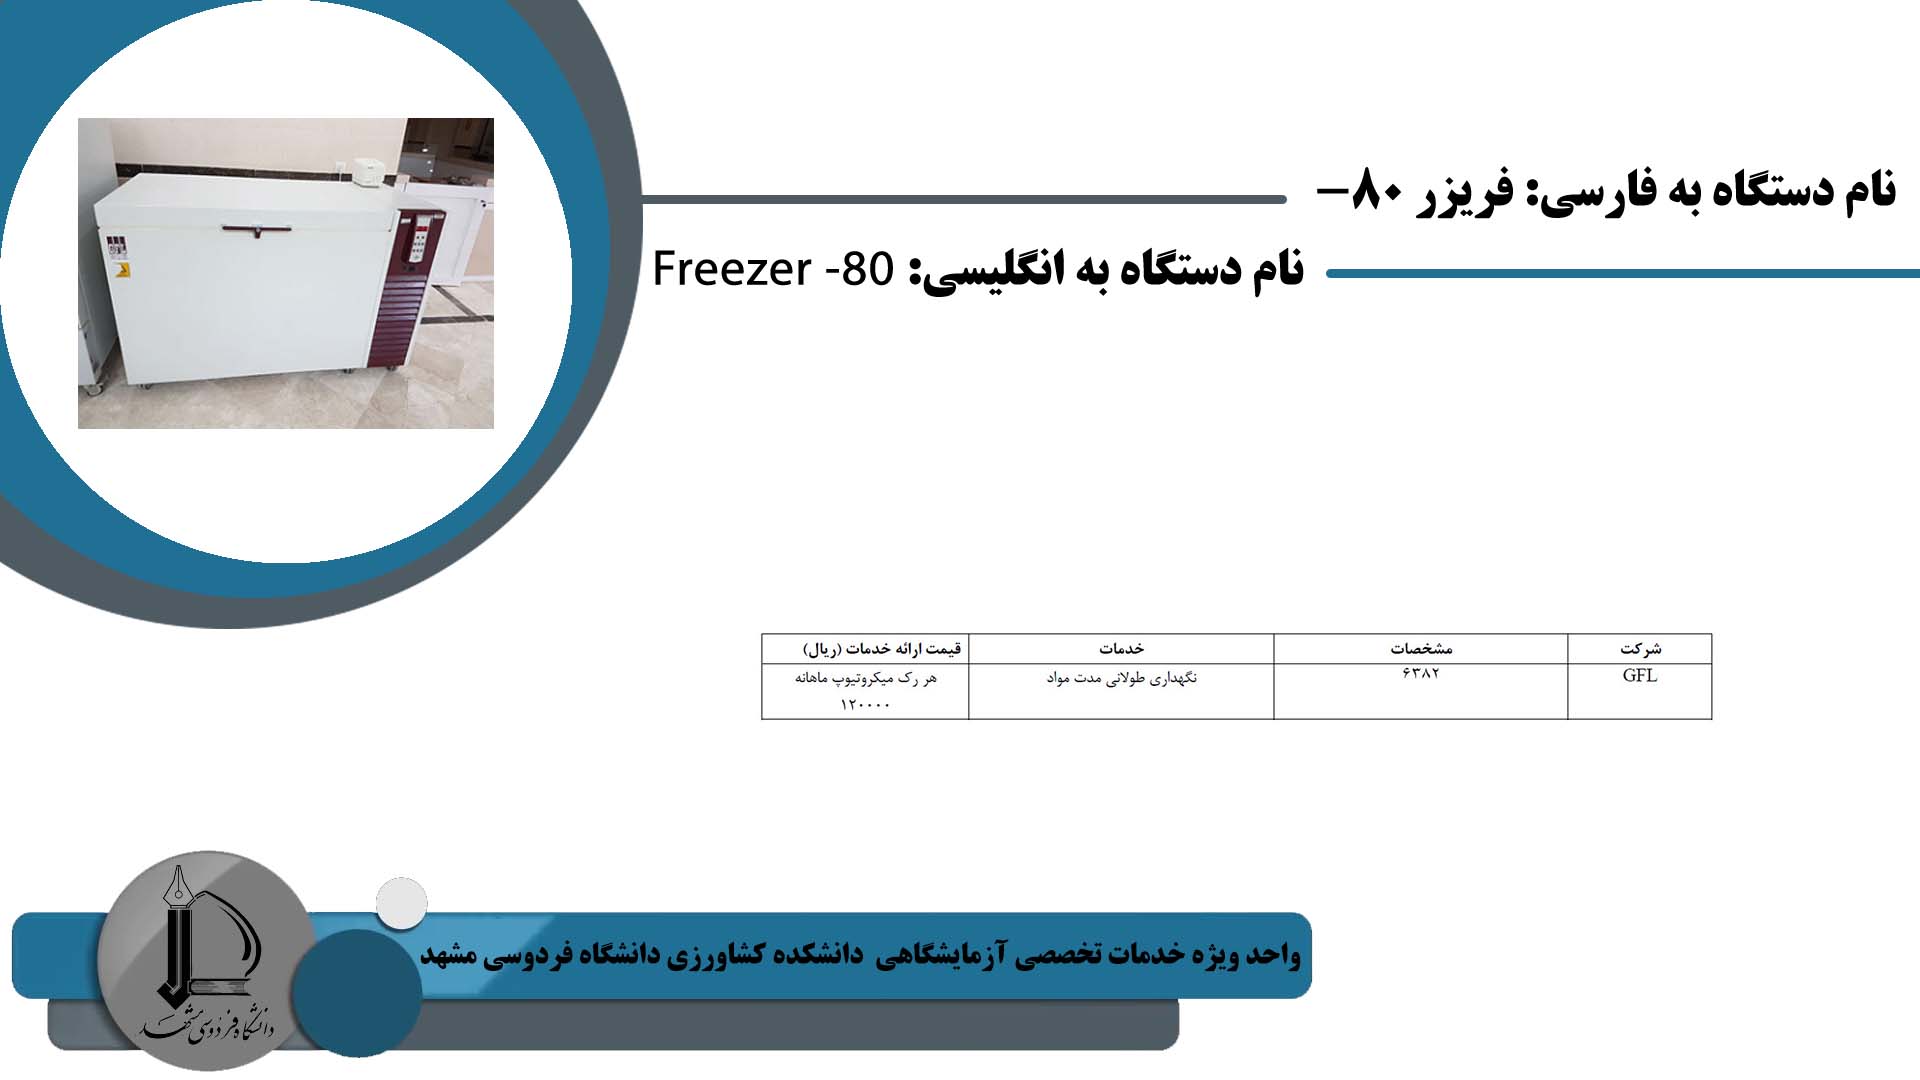 Freezer -80